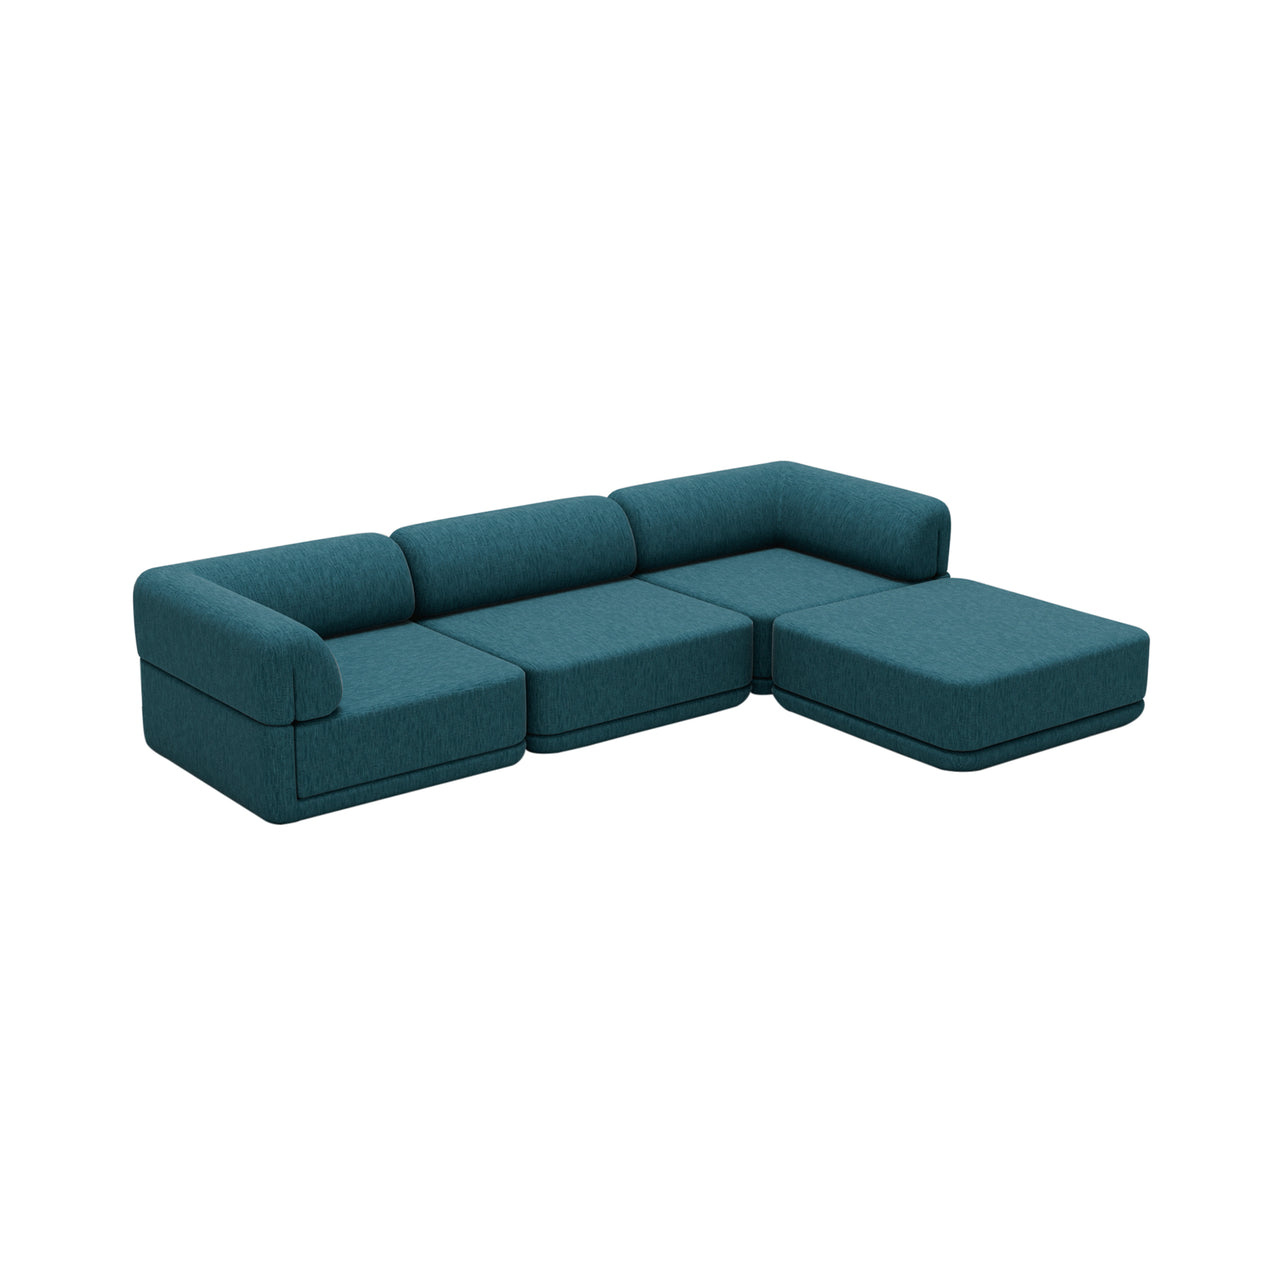 Cube Modular Sofa: Configuration 4 + Chenille Teal